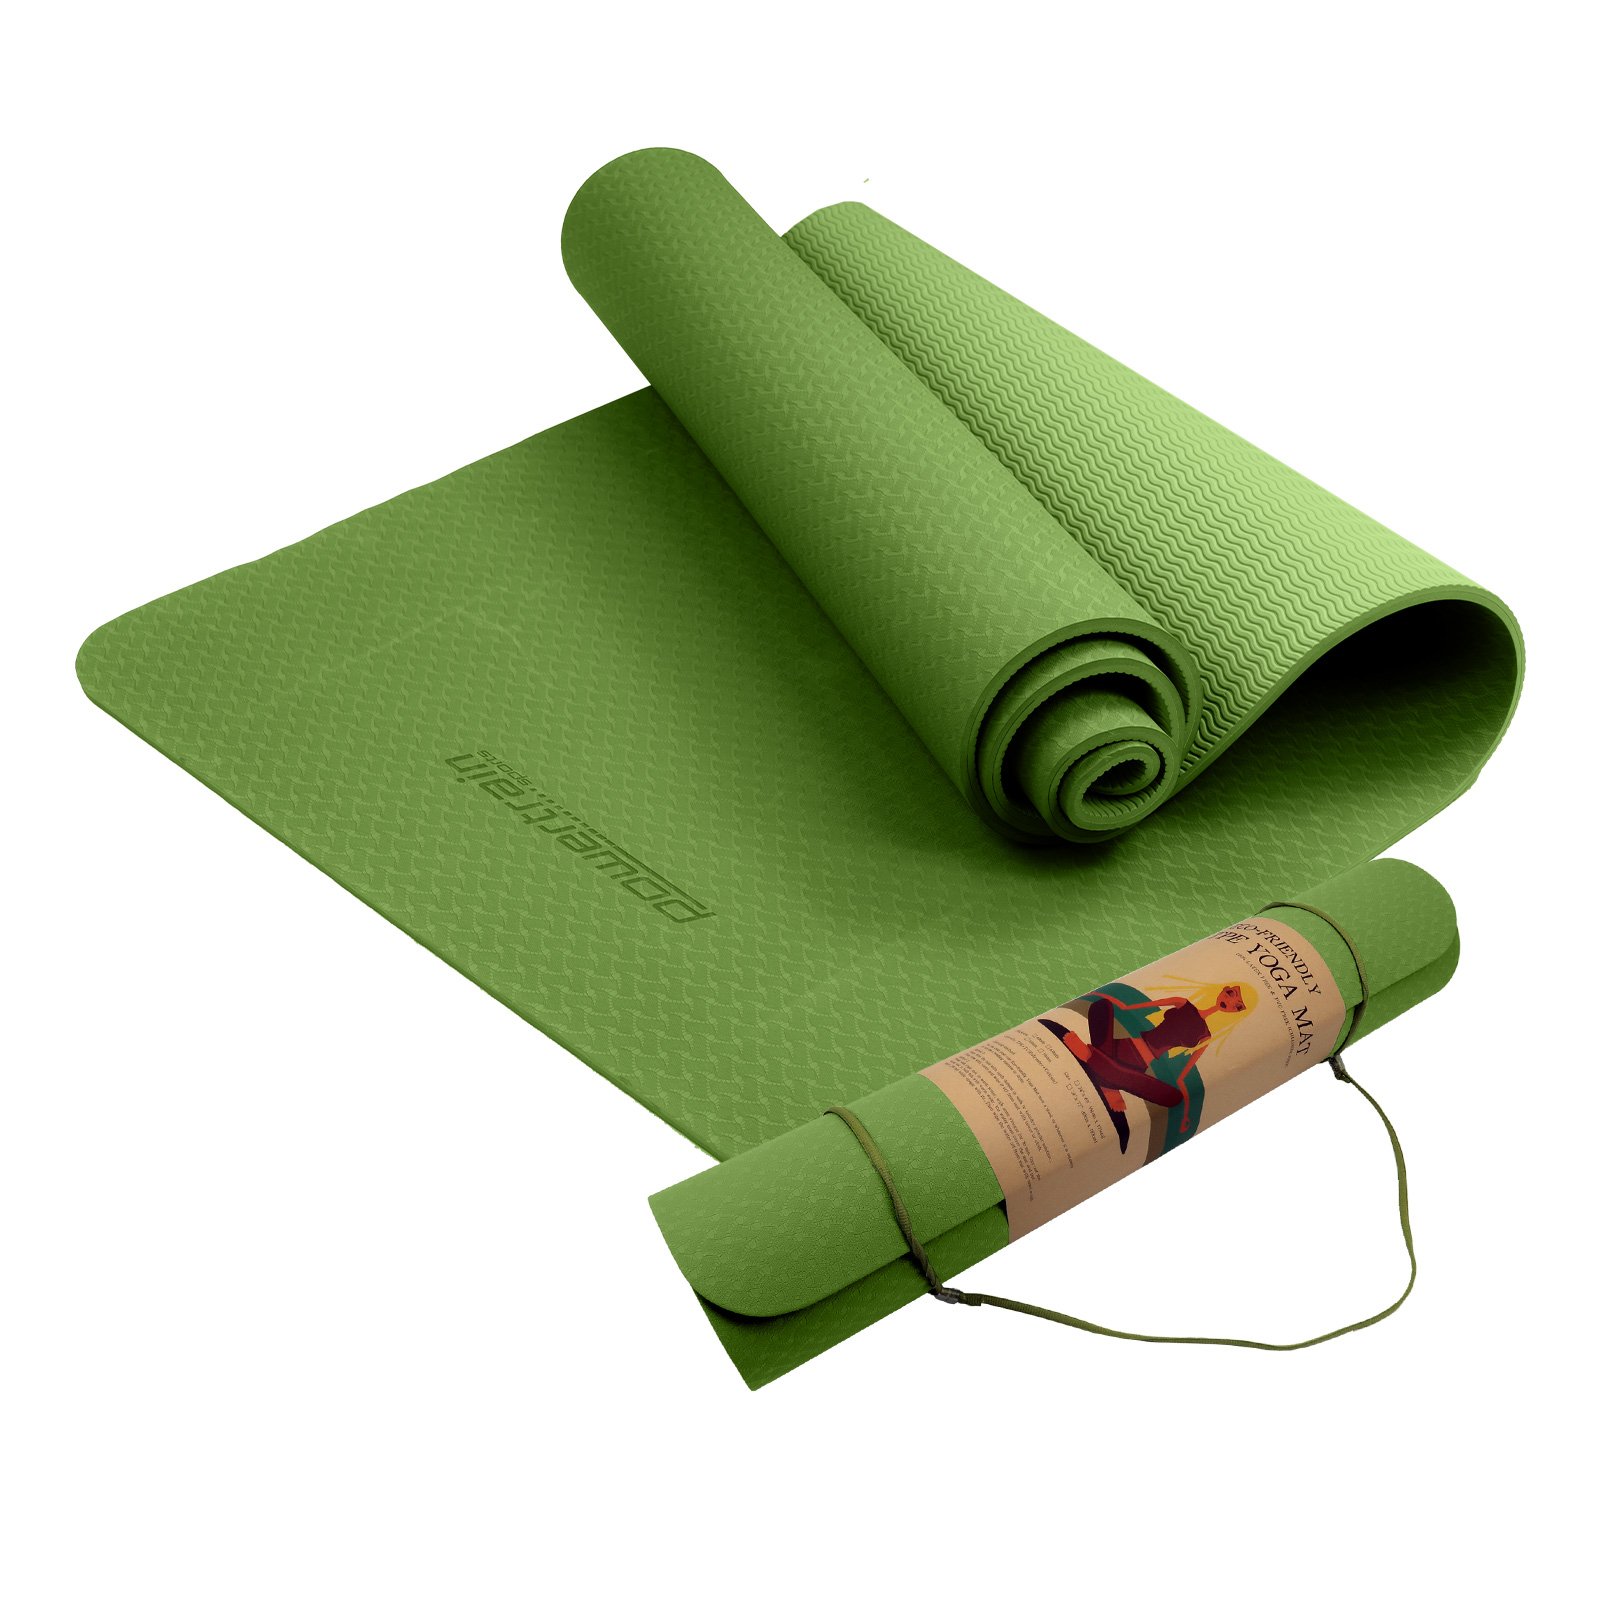 Powertrain Eco-Friendly TPE Yoga Pilates Exercise Mat 6mm - Green 2